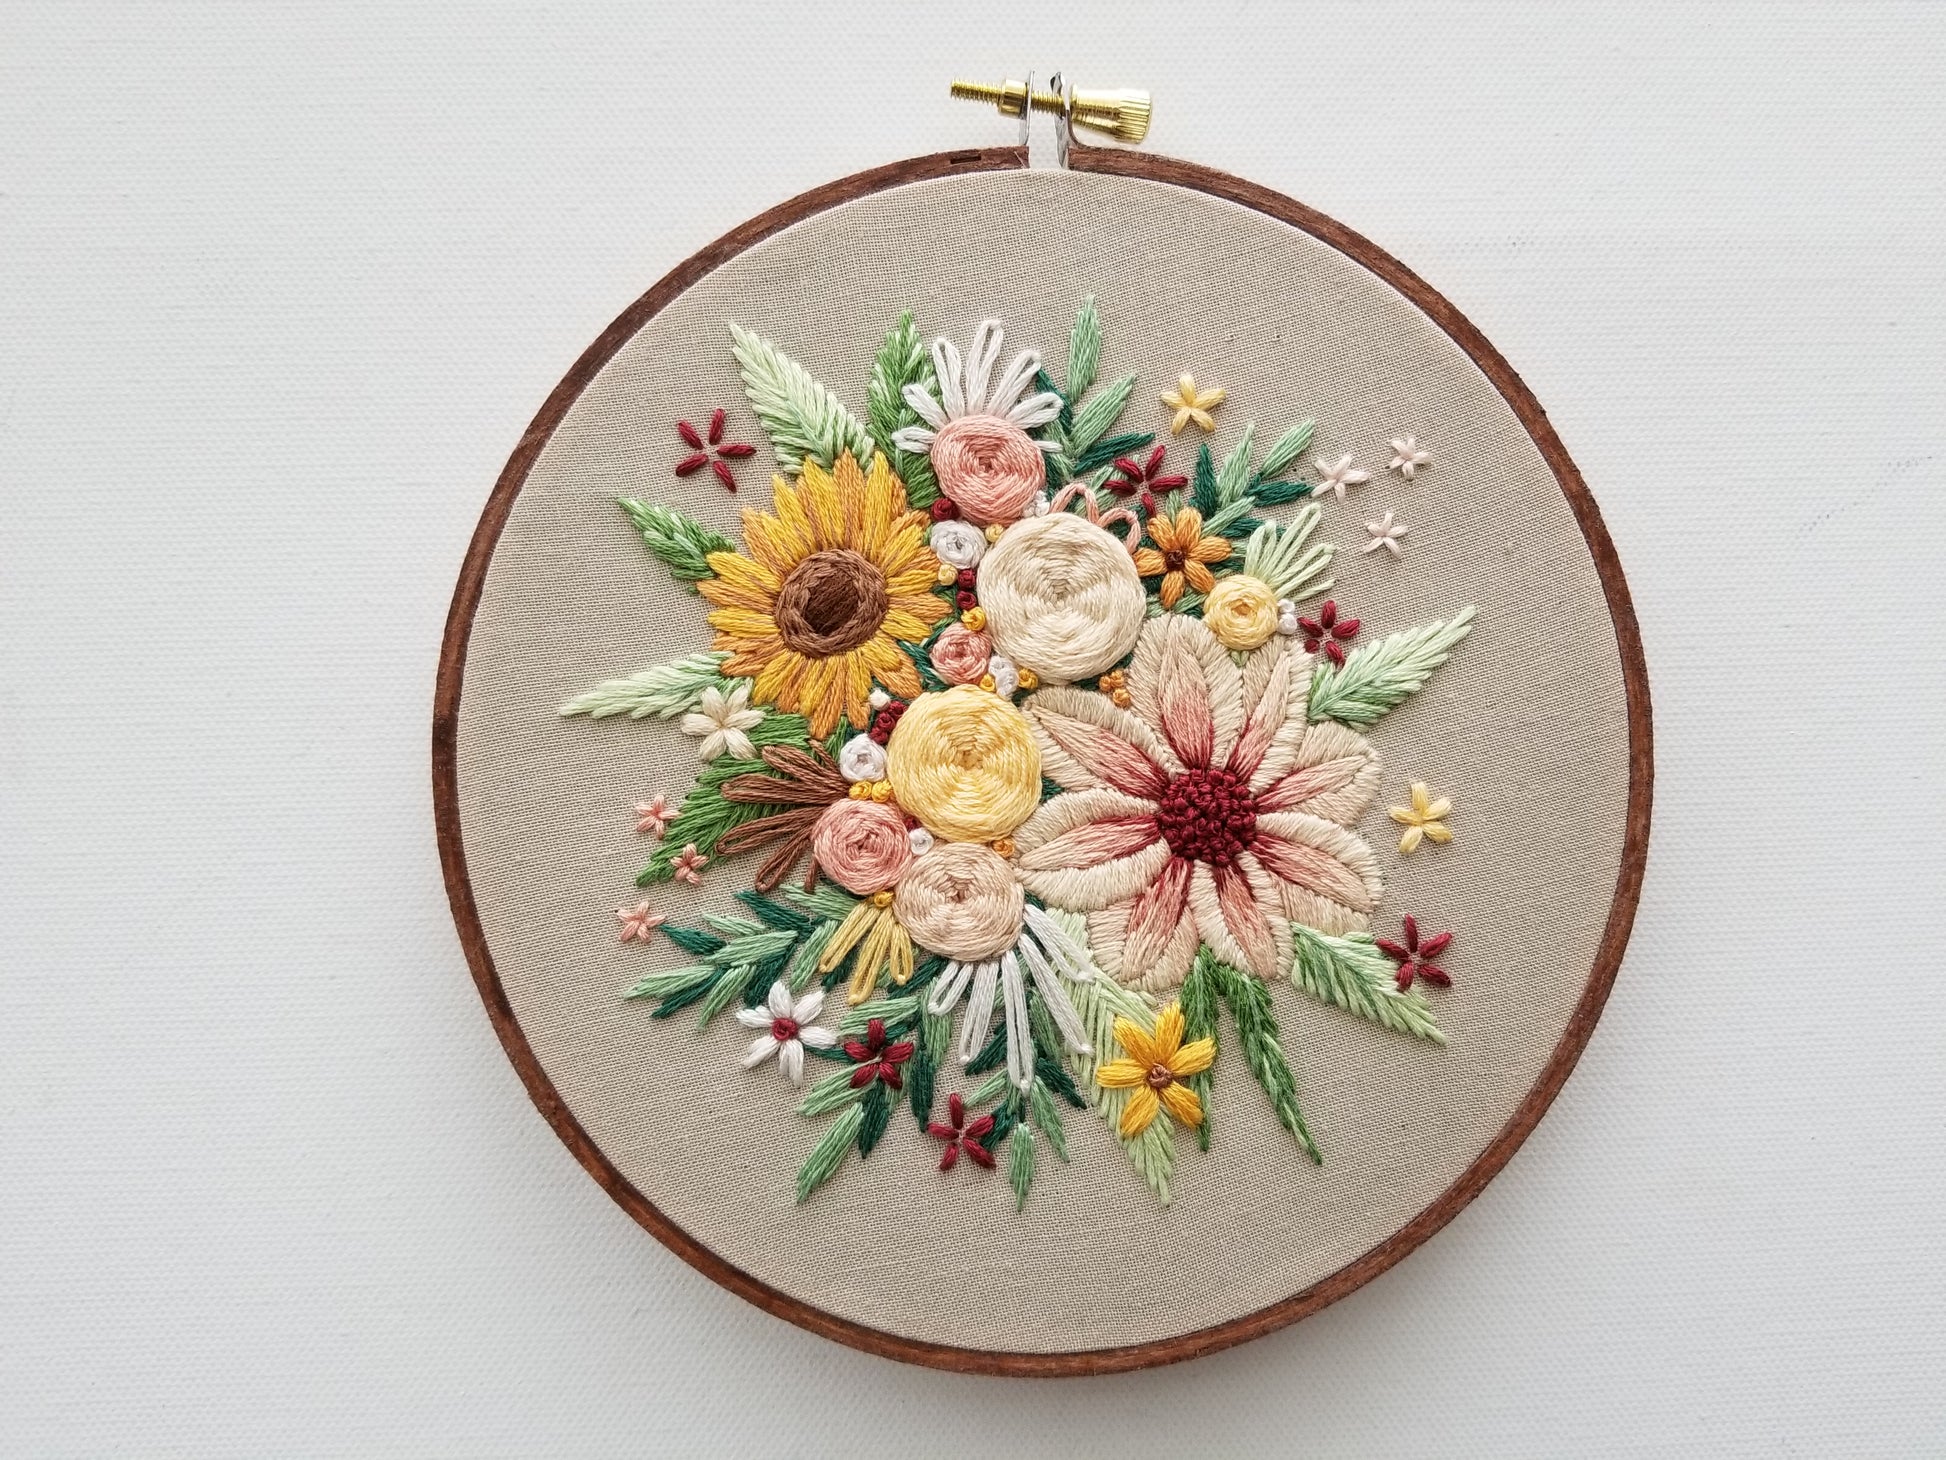 Mini Book Embroidery Pattern - Make